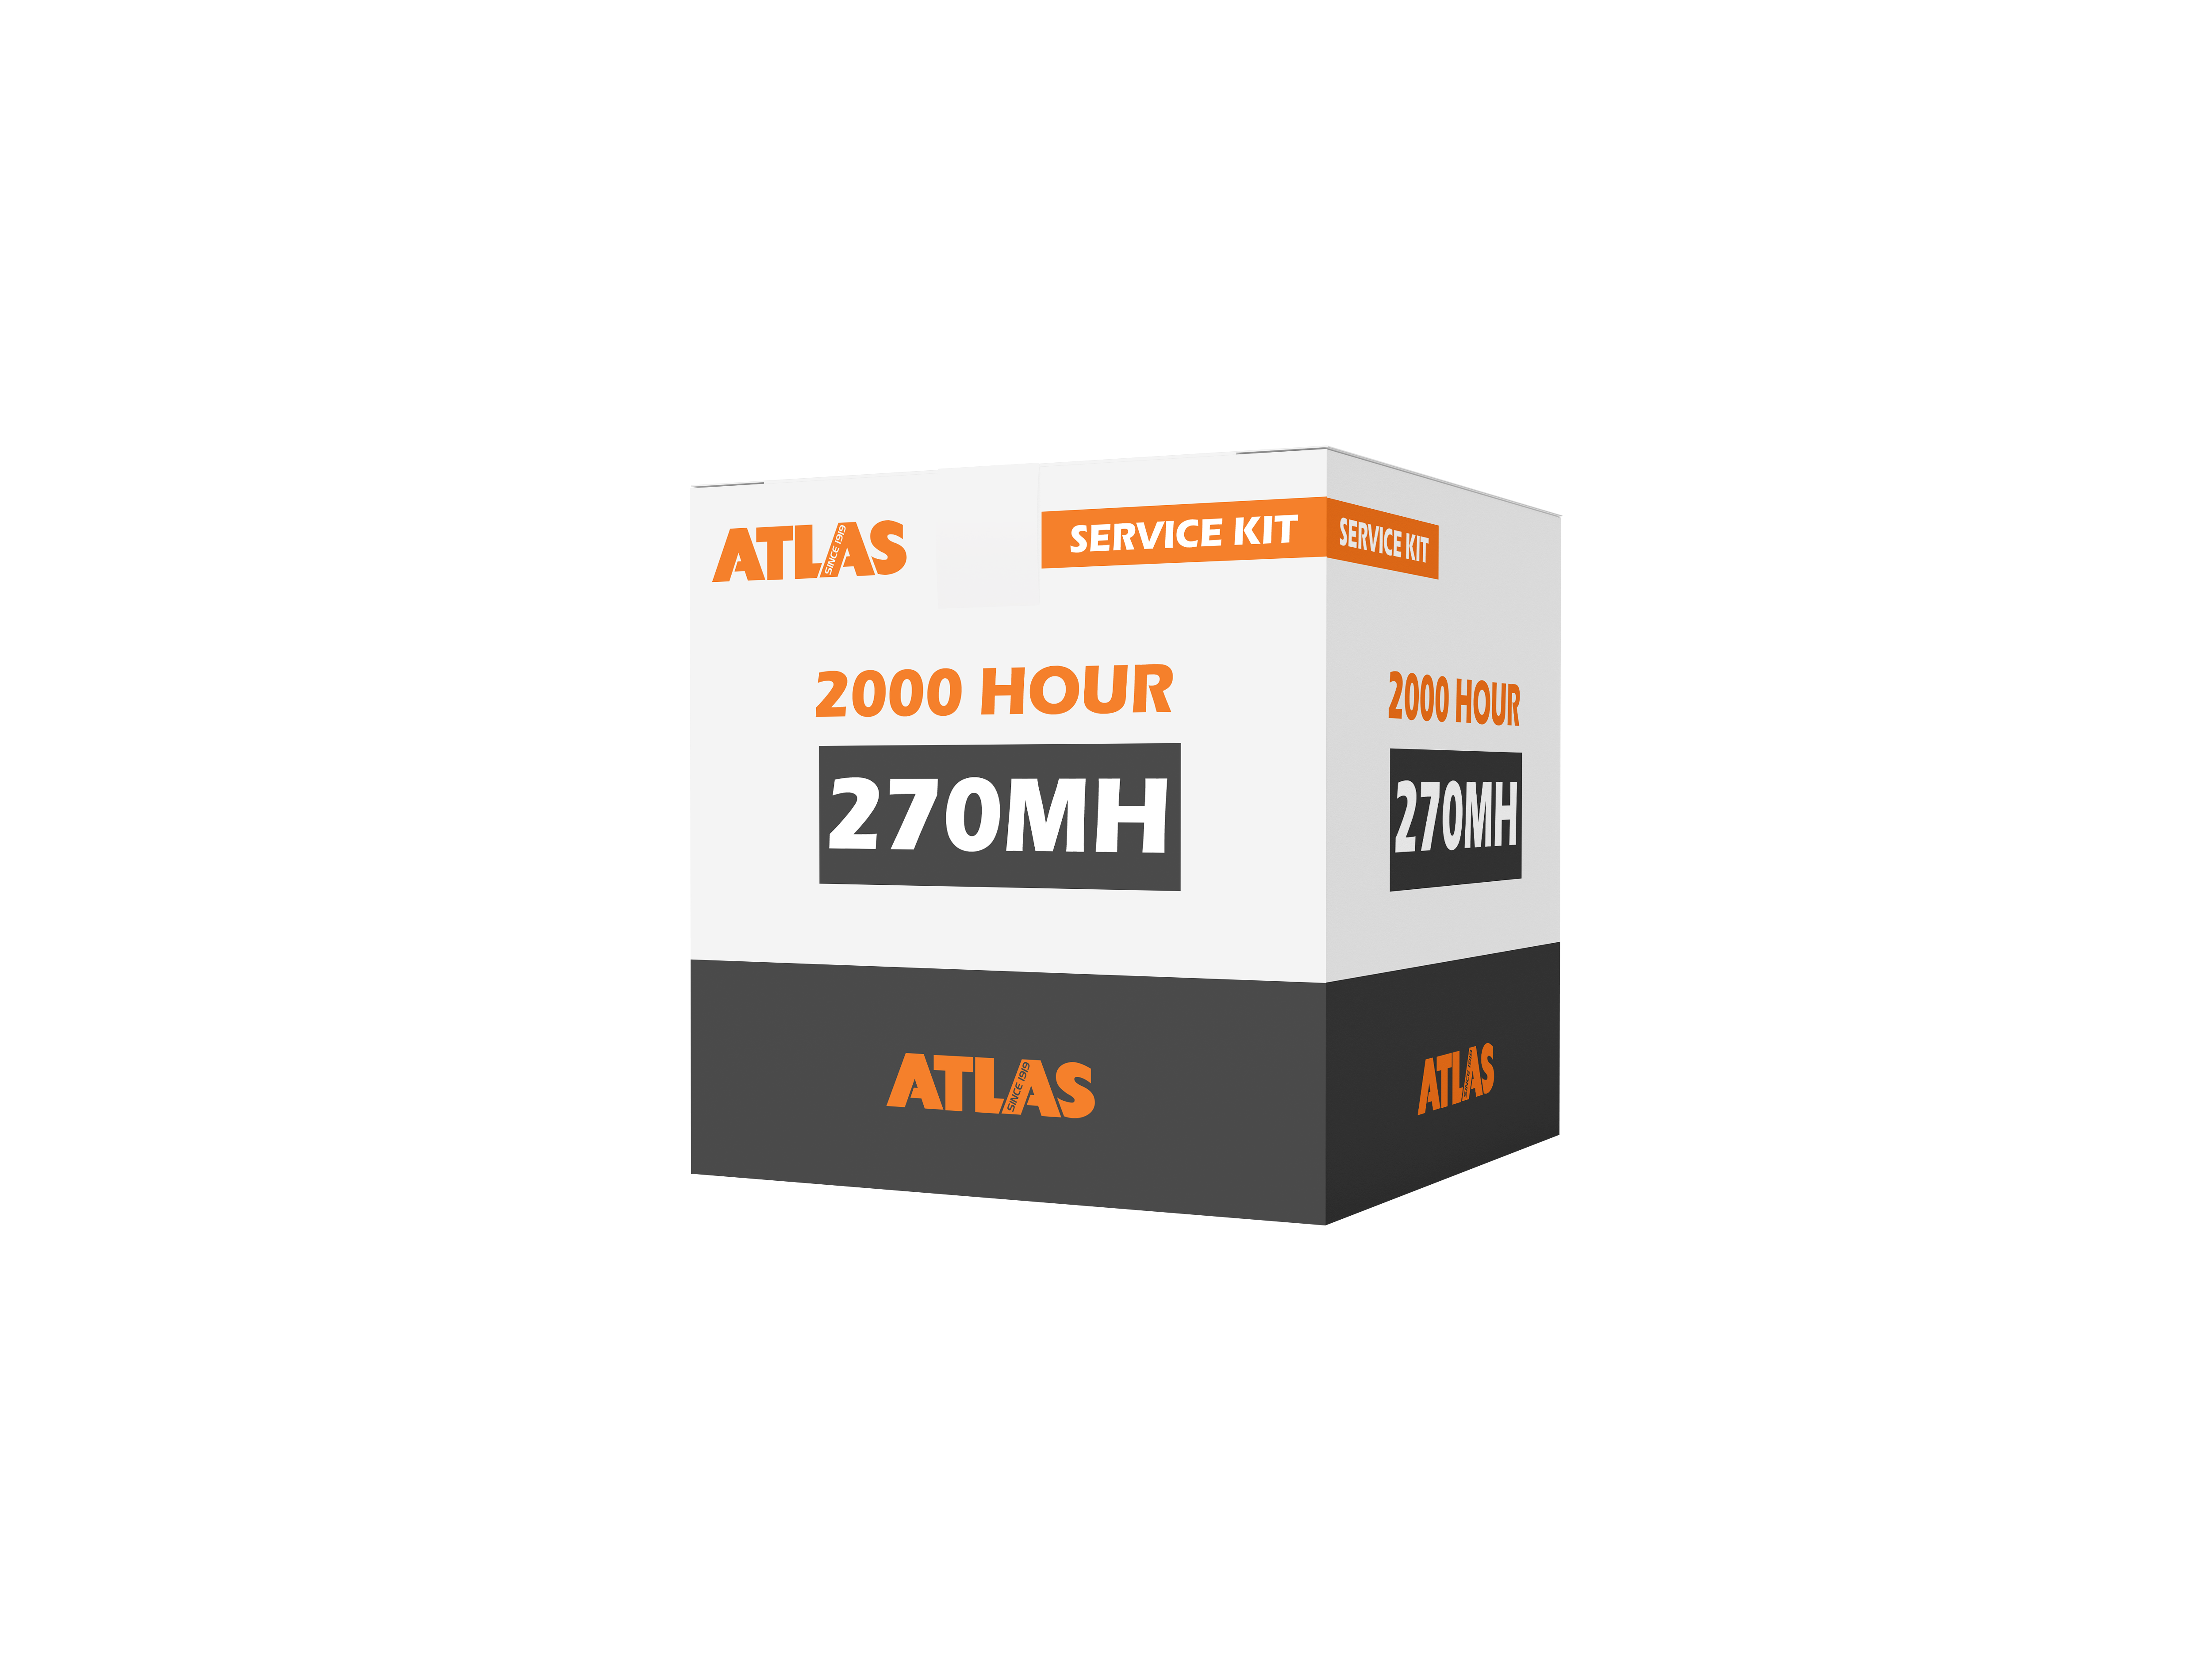 Atlas 270MH 2000 Hour Service Kit (Tier 4 I Engine)